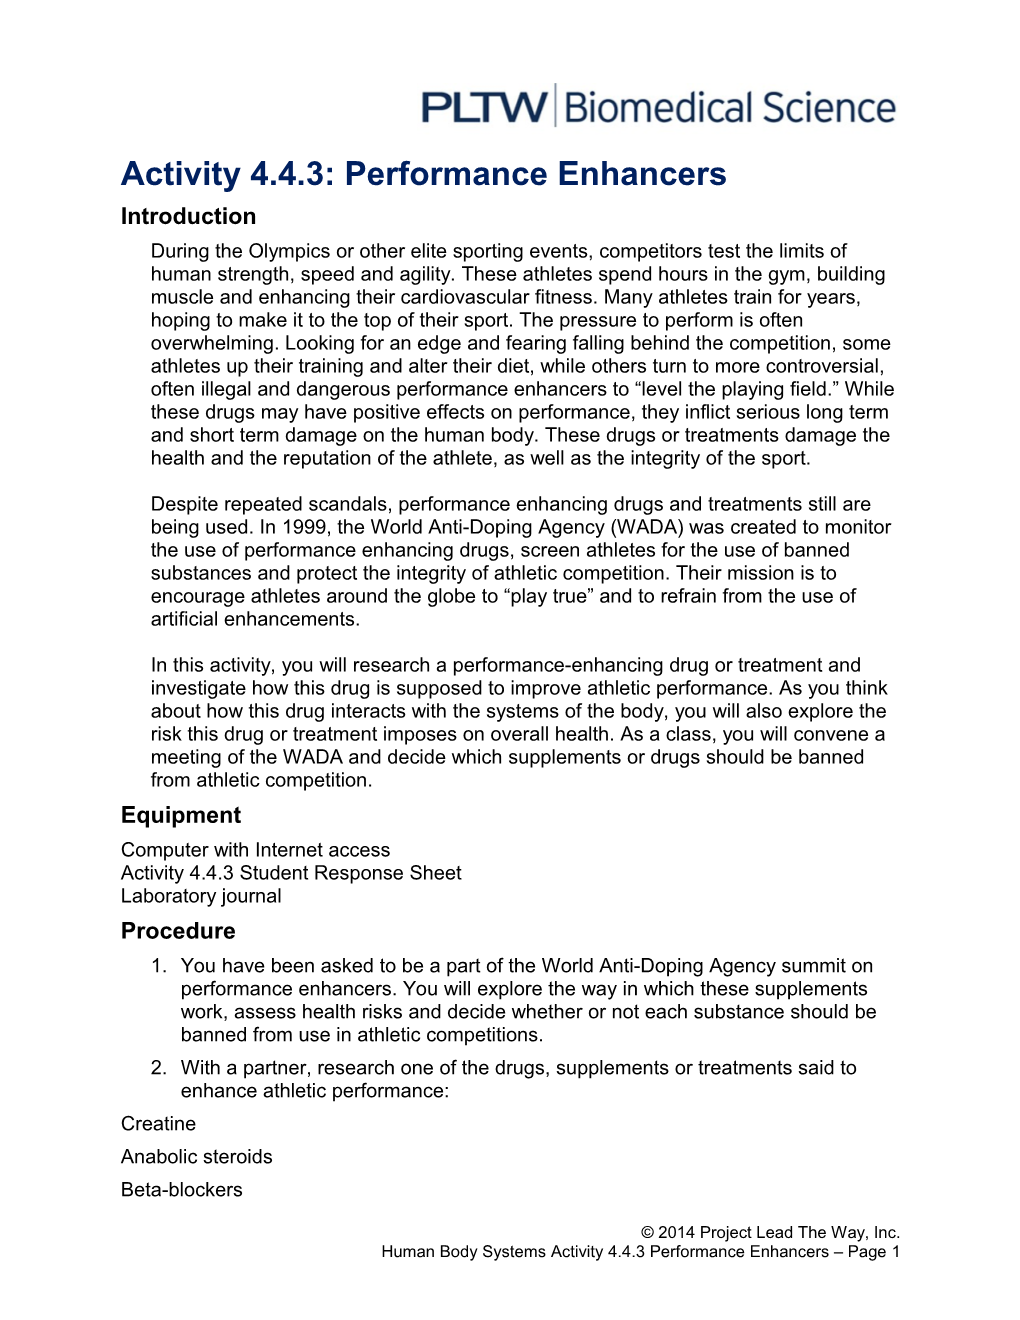 Activity 4.4.3: Performance Enhancers